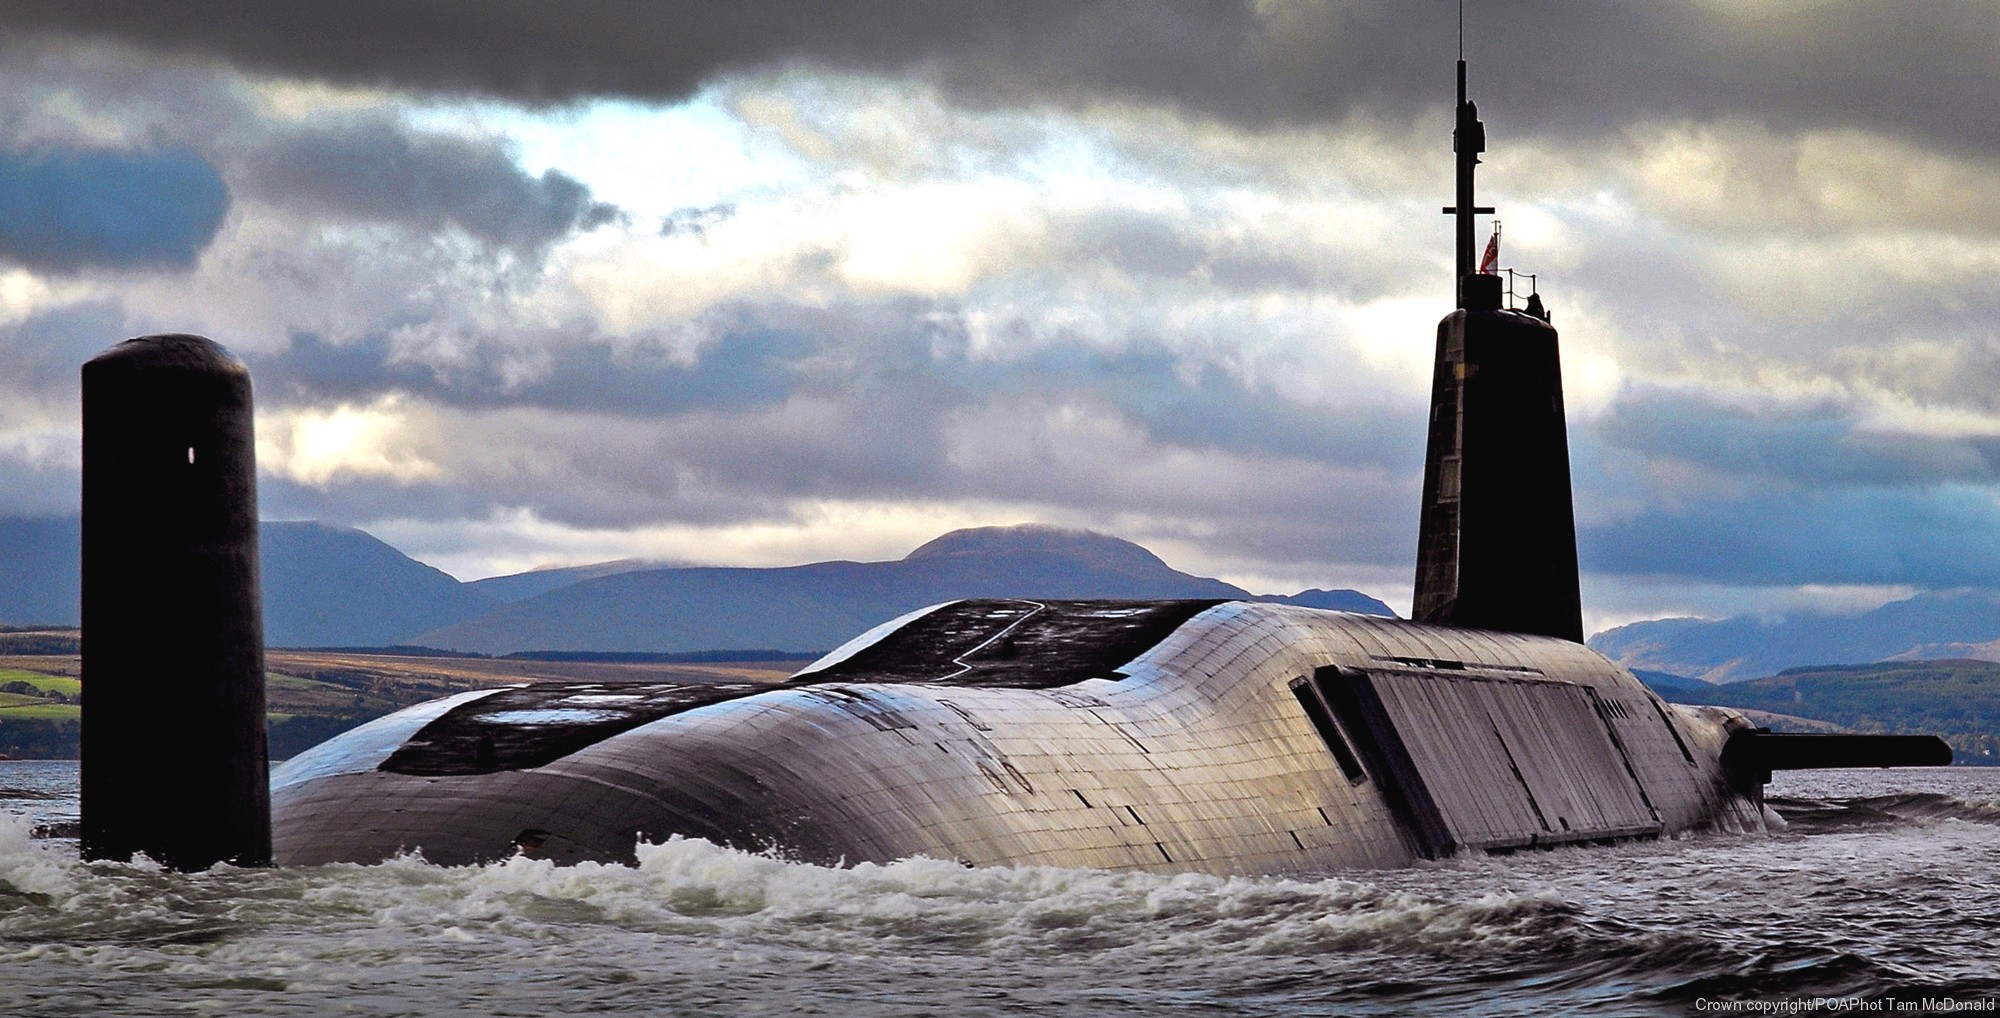 s31 hms vengeance vanguard class ballistic missile submarine ssbn trident slbm royal navy 02 hmnb clyde faslane